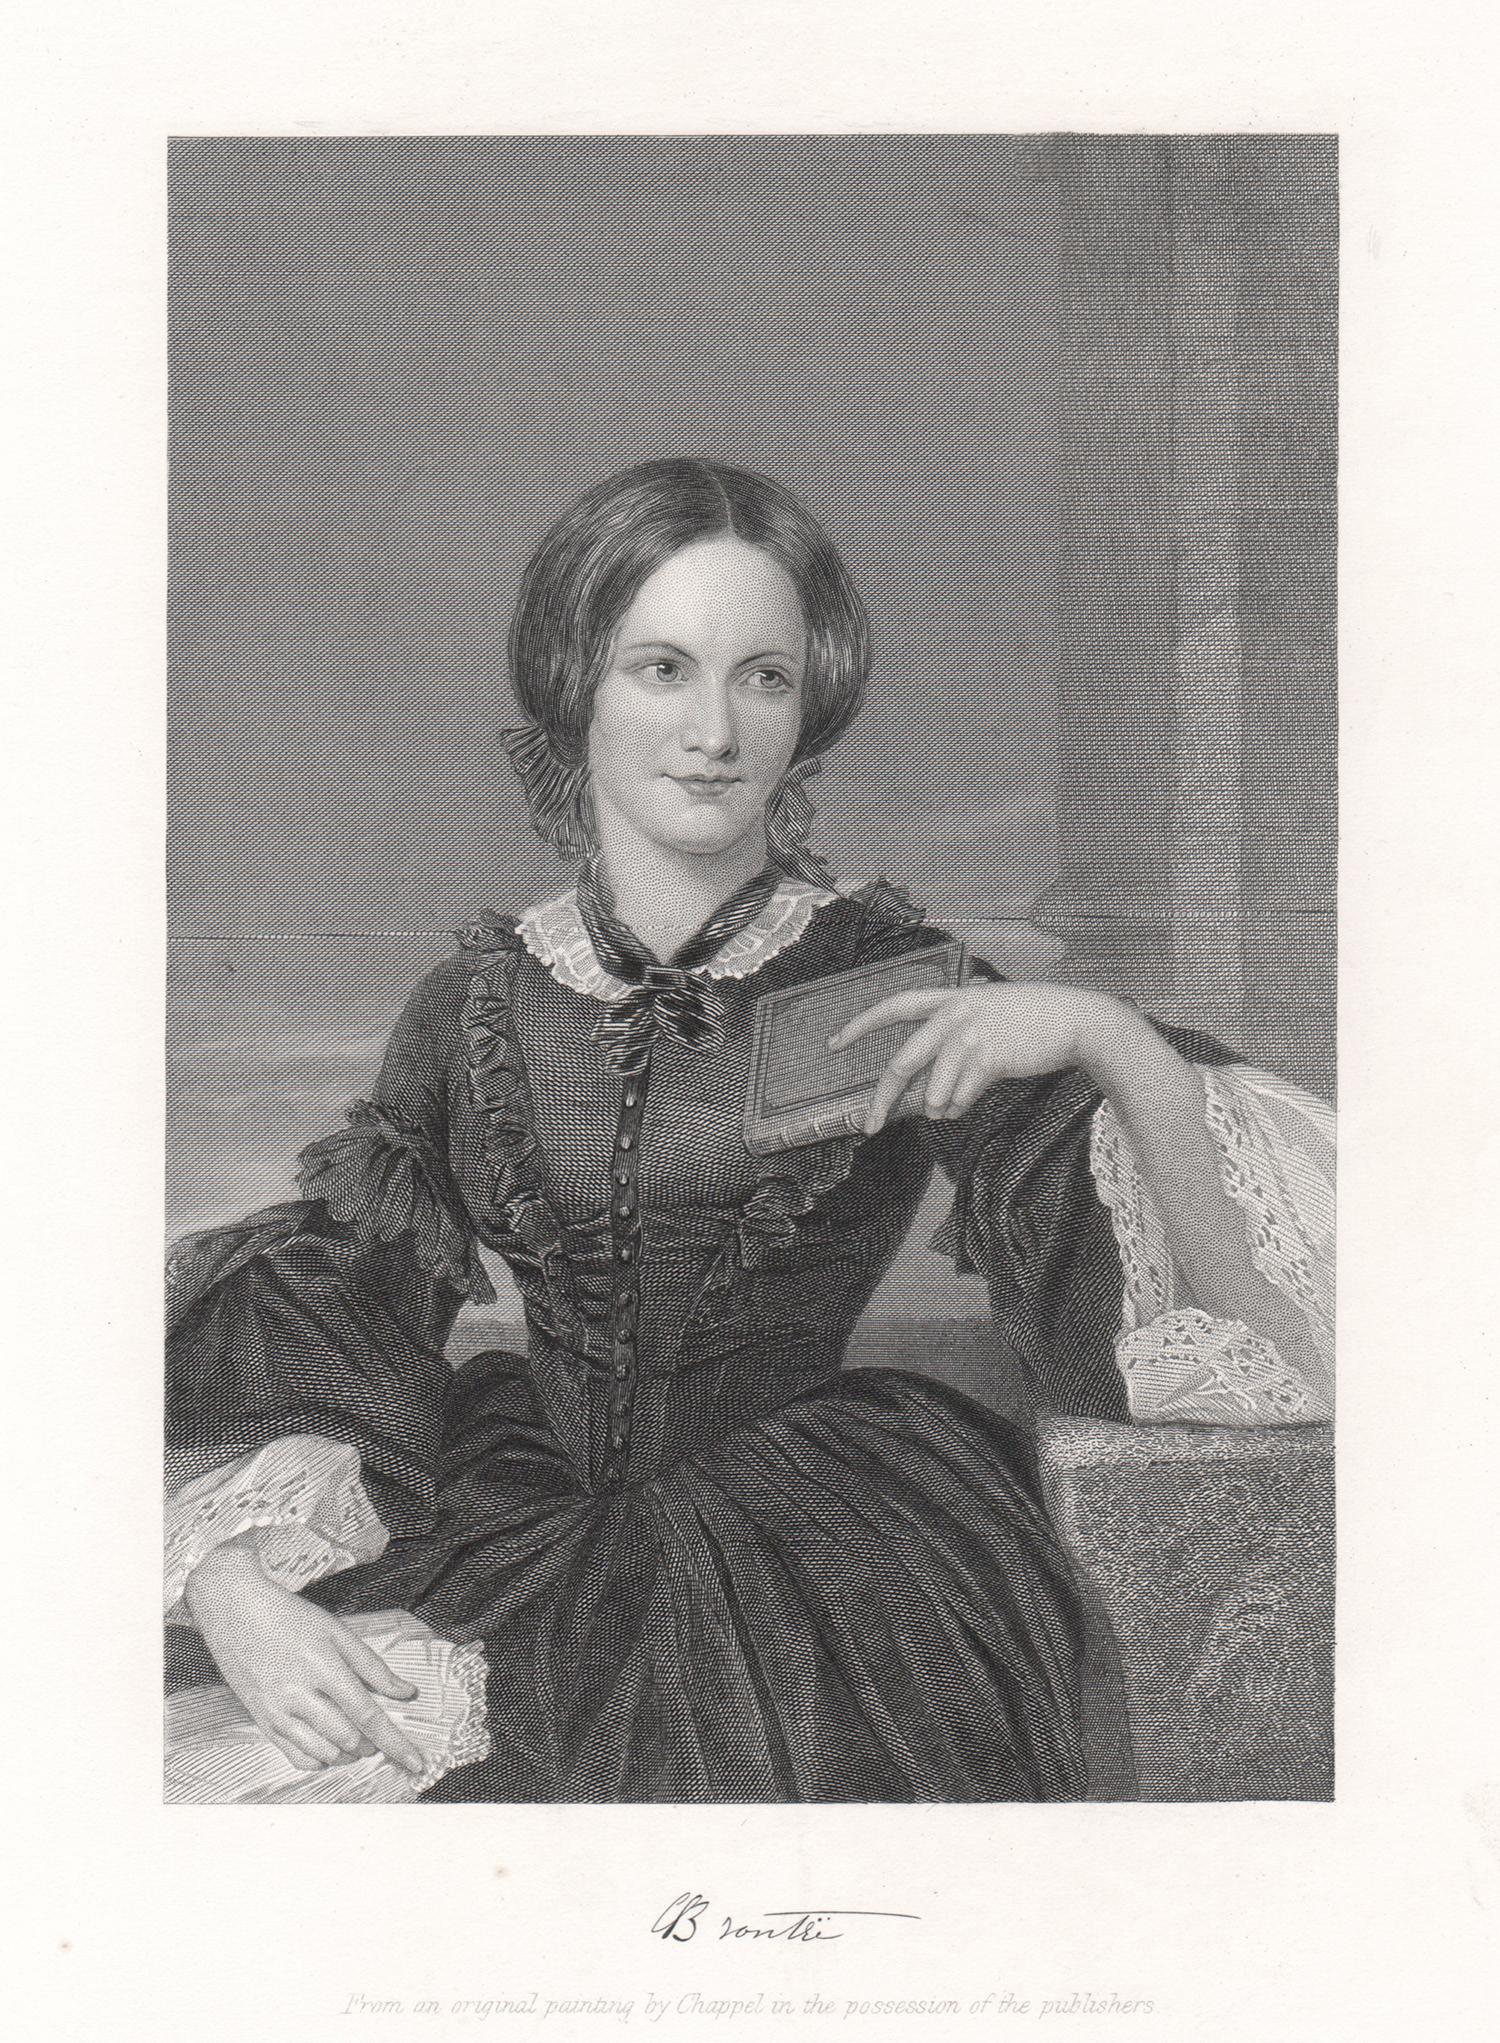 Charlotte Bronte, author, portrait engraving, c1870